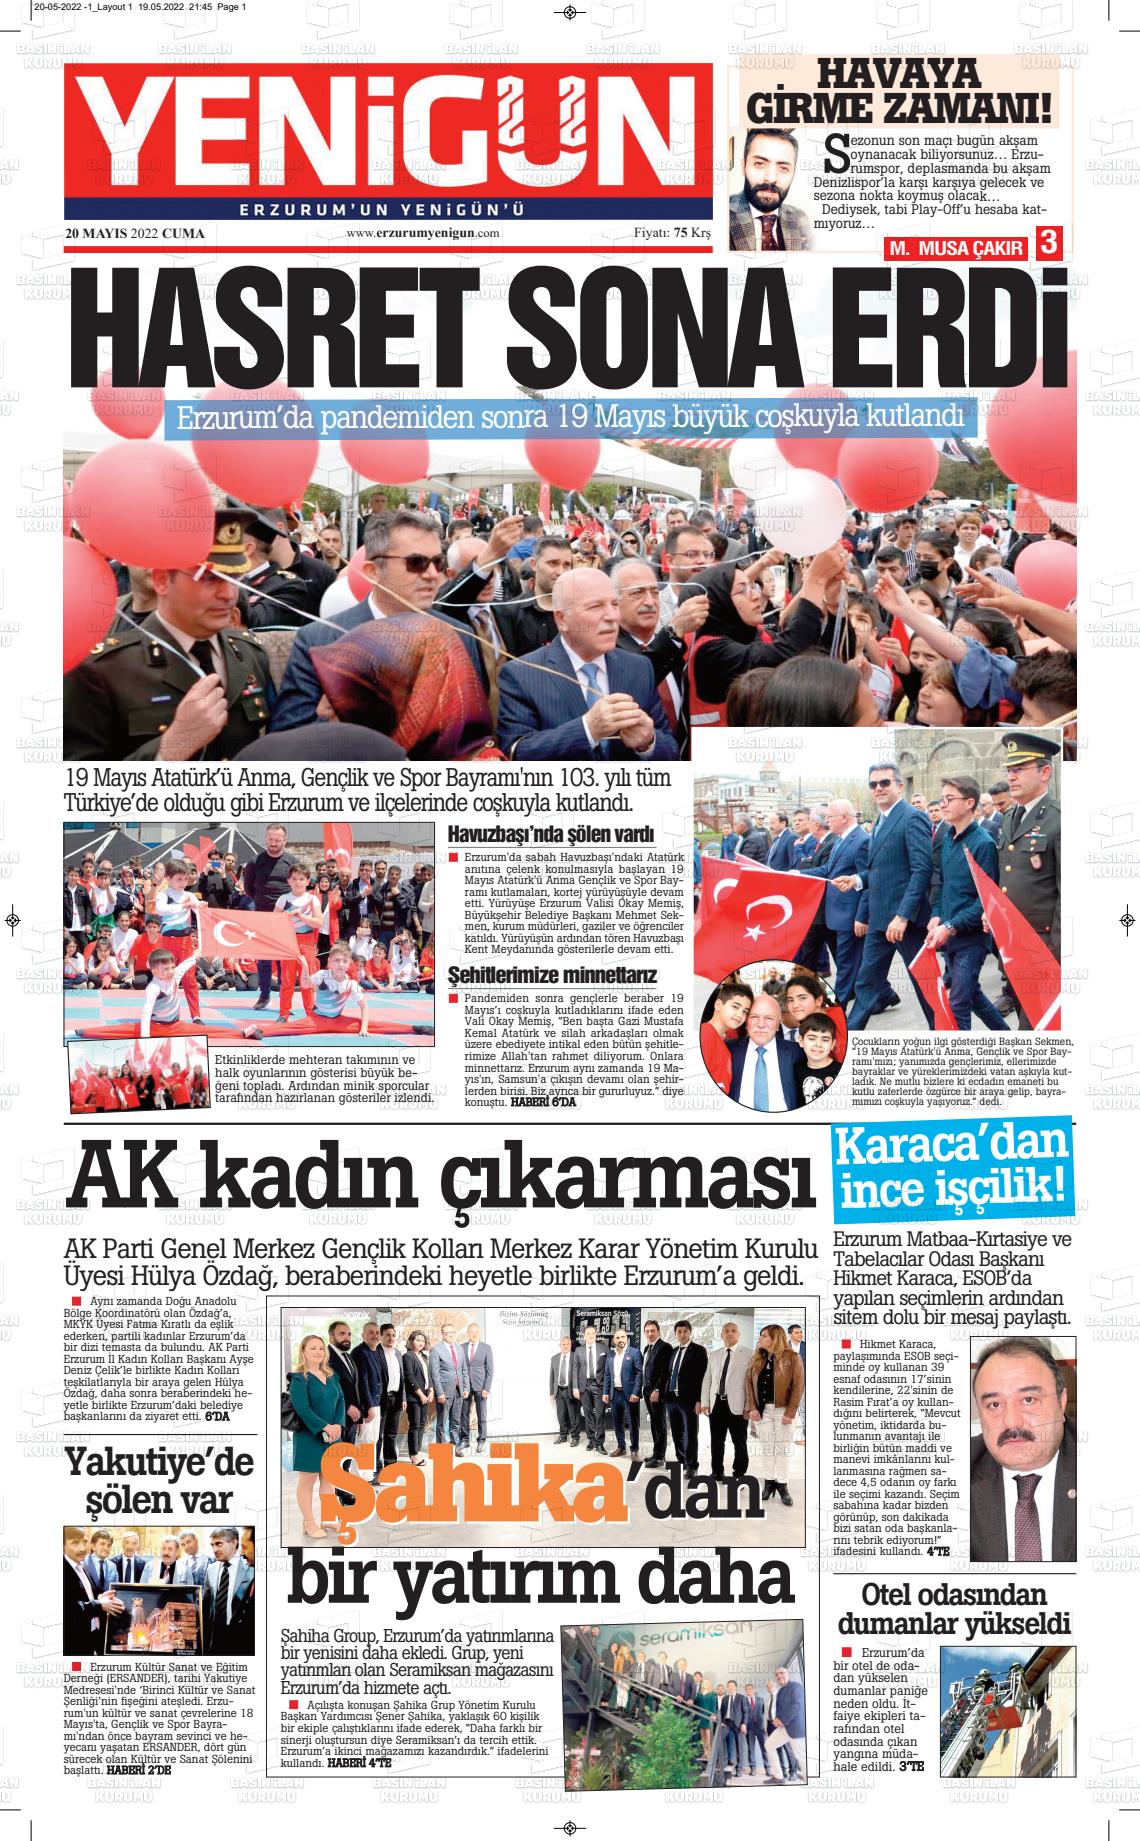 20 Mayıs 2022 Erzurum Yenigün Gazete Manşeti